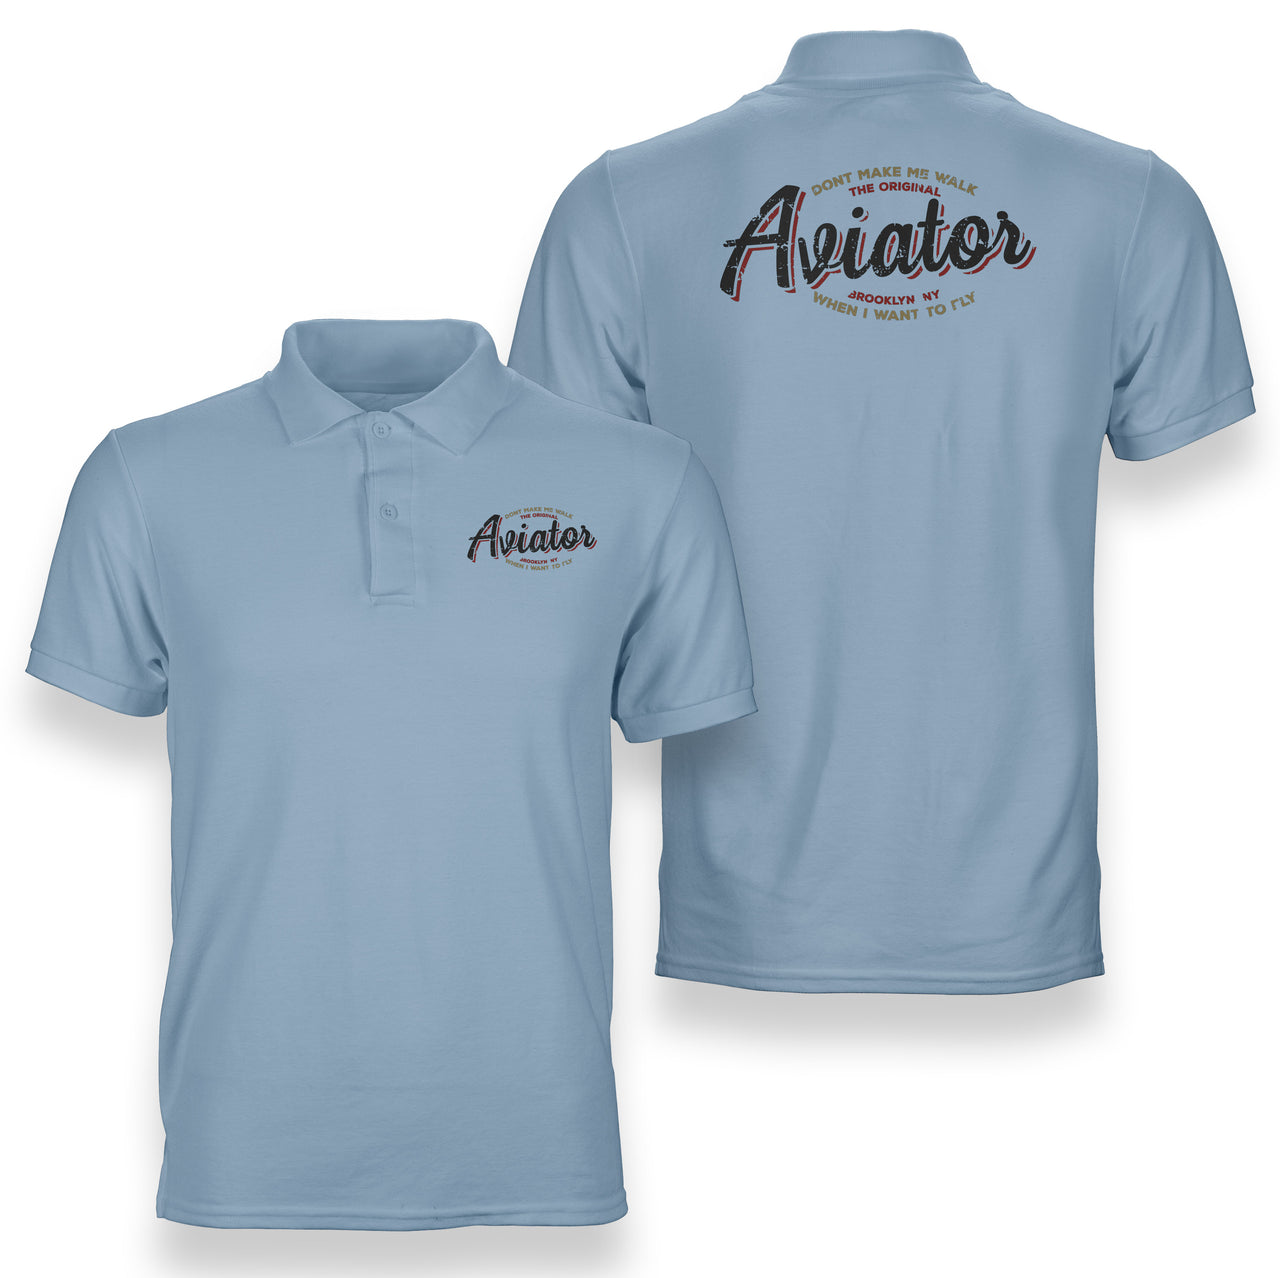 Aviator - Dont Make Me Walk Designed Double Side Polo T-Shirts